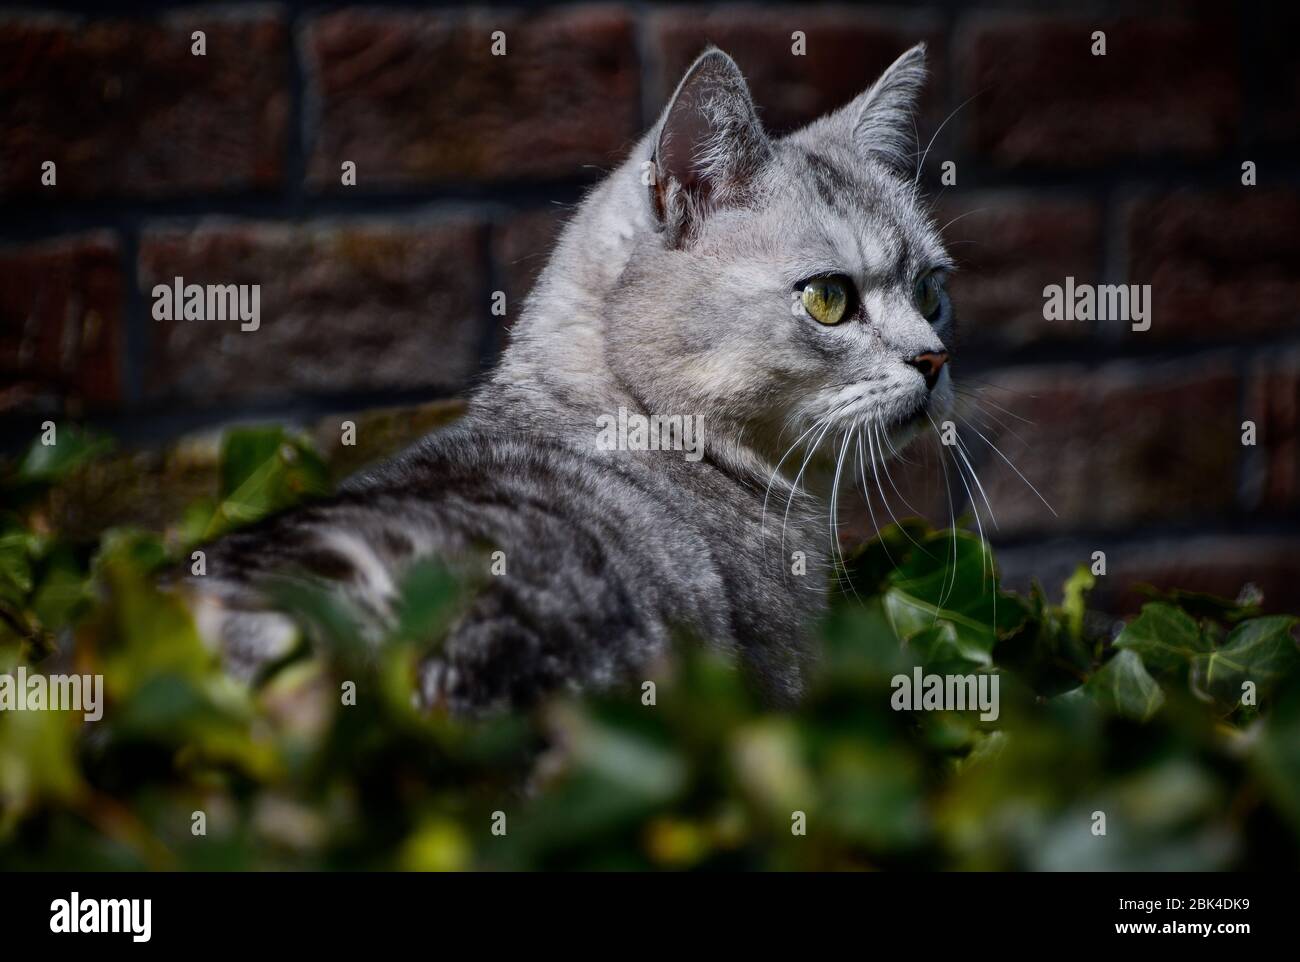 Grey cat in green foliage looking ahead Stock Photo